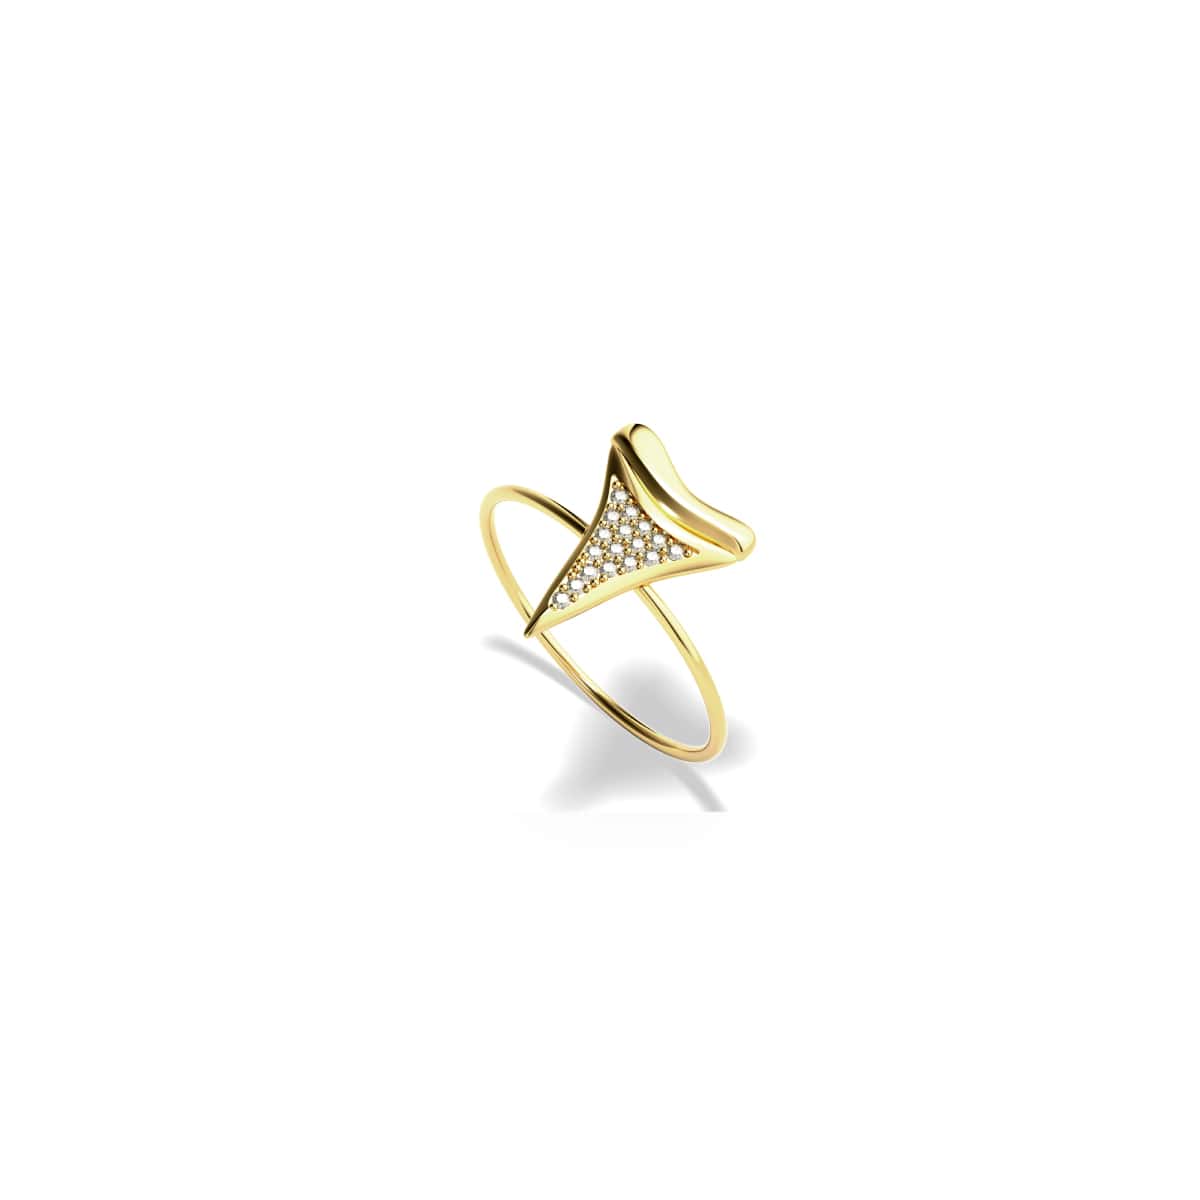 Tiny Charms II by Megu's Attic 59. Gold Starfish / Jump Ring